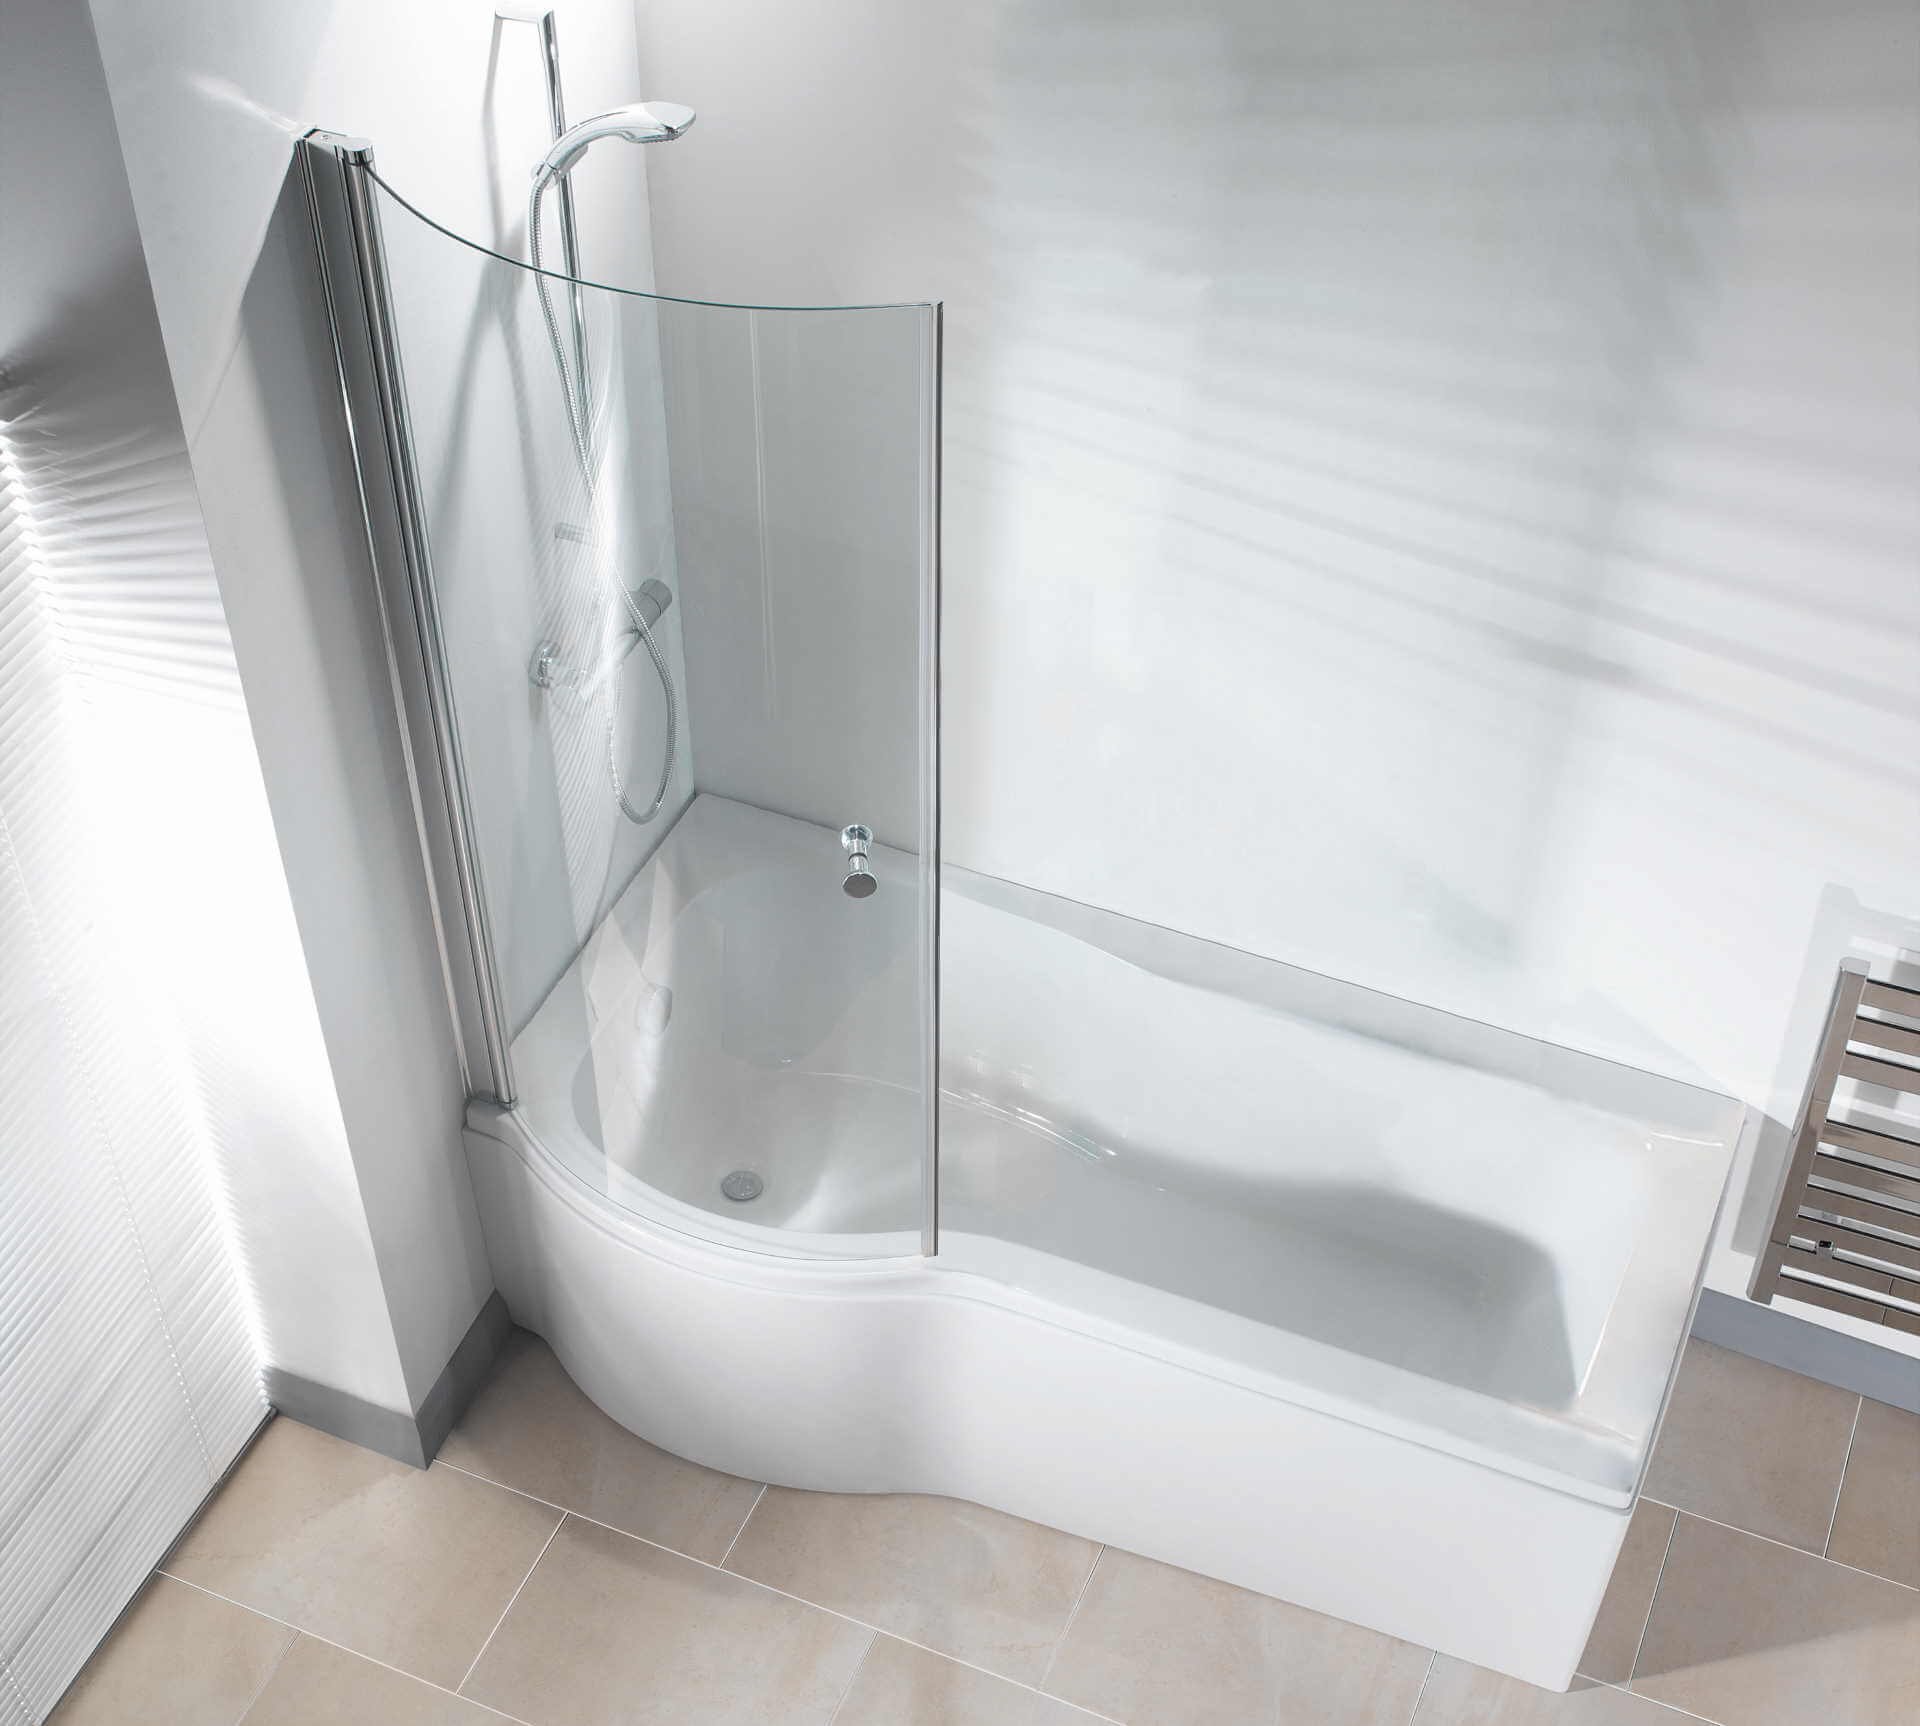 Стеклянные ванны отзывы. Шторка Ravak avdp3-170. Ванна-душевая кабина. Ванна со стеклянной шторкой. Ванная с душем.